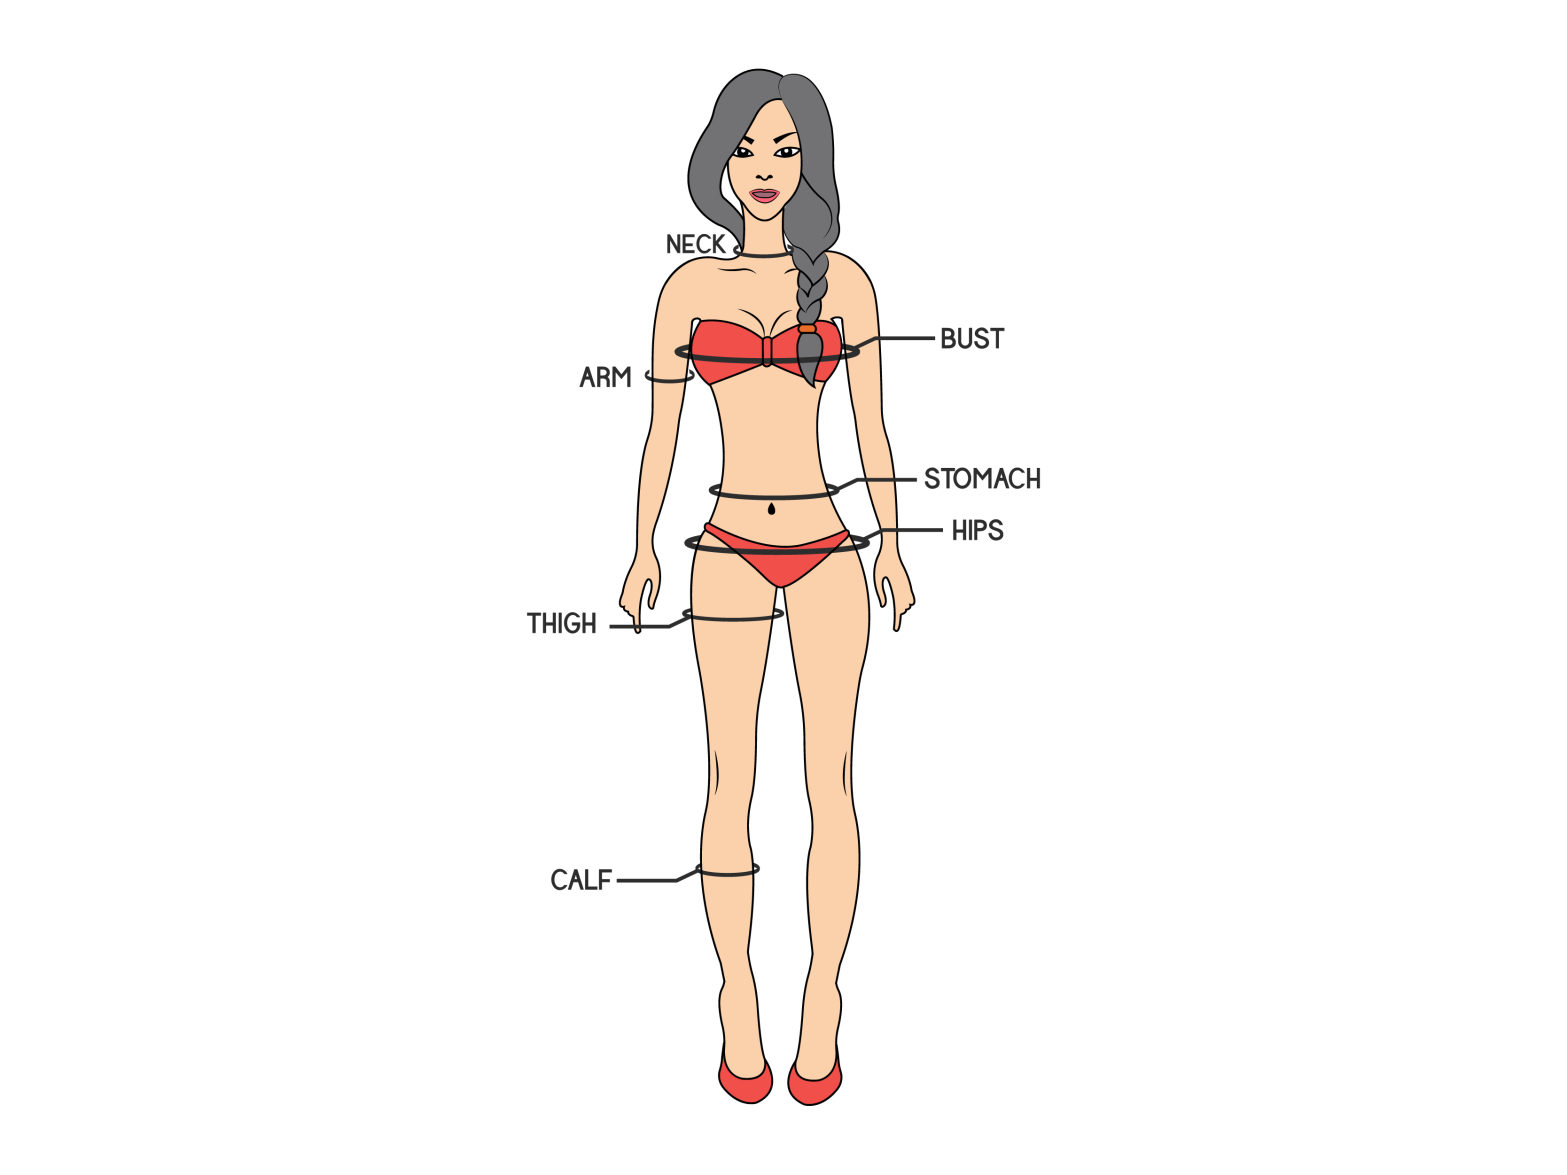 printable-body-measurement-chart-female-by-wilirax-on-dribbble